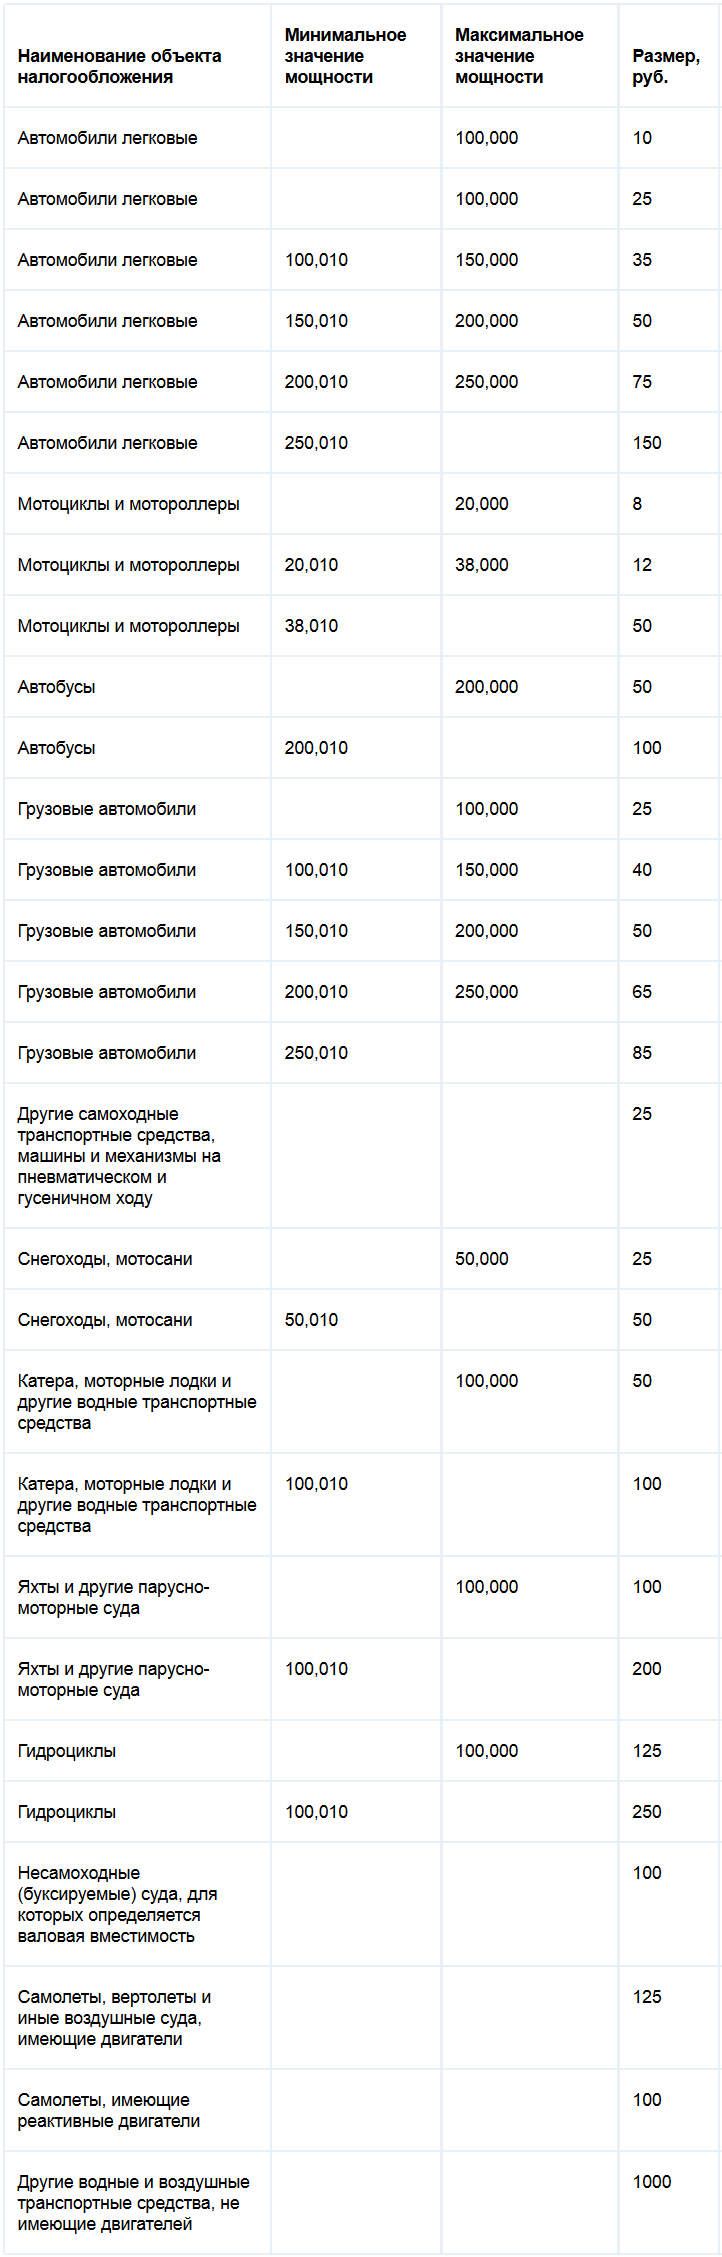 Ставки транспортного налога республики Татарстан